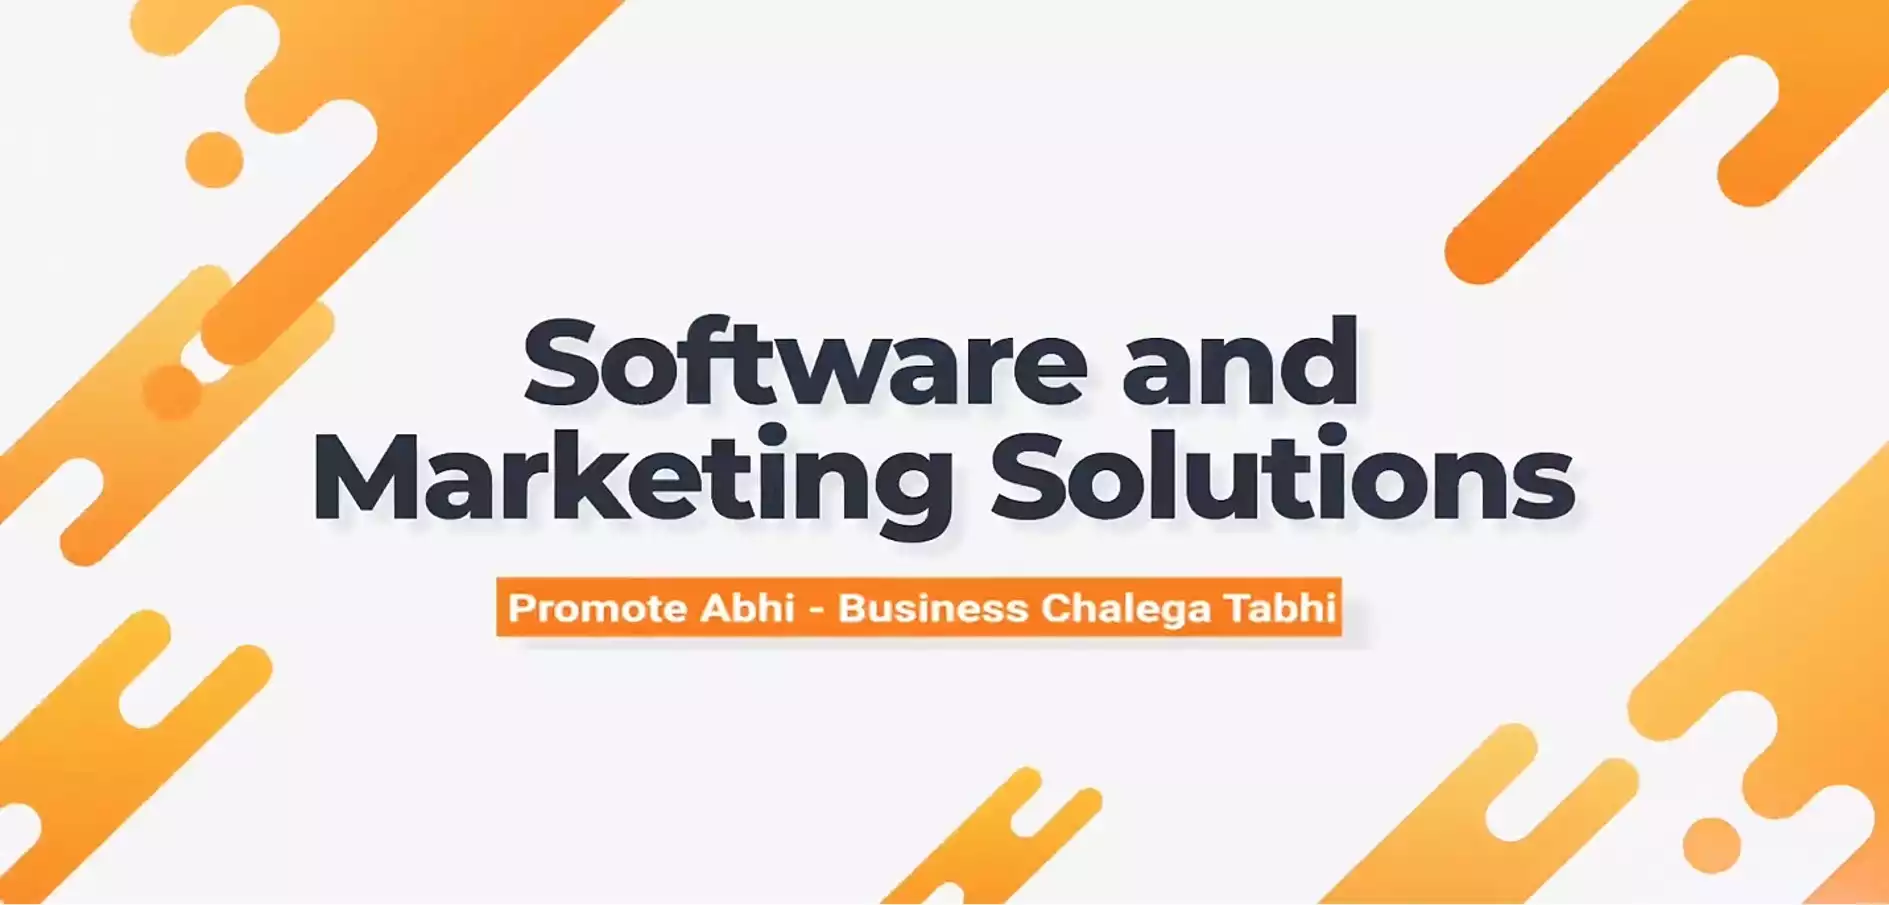 Digital Marketing Services - Promote Abhi